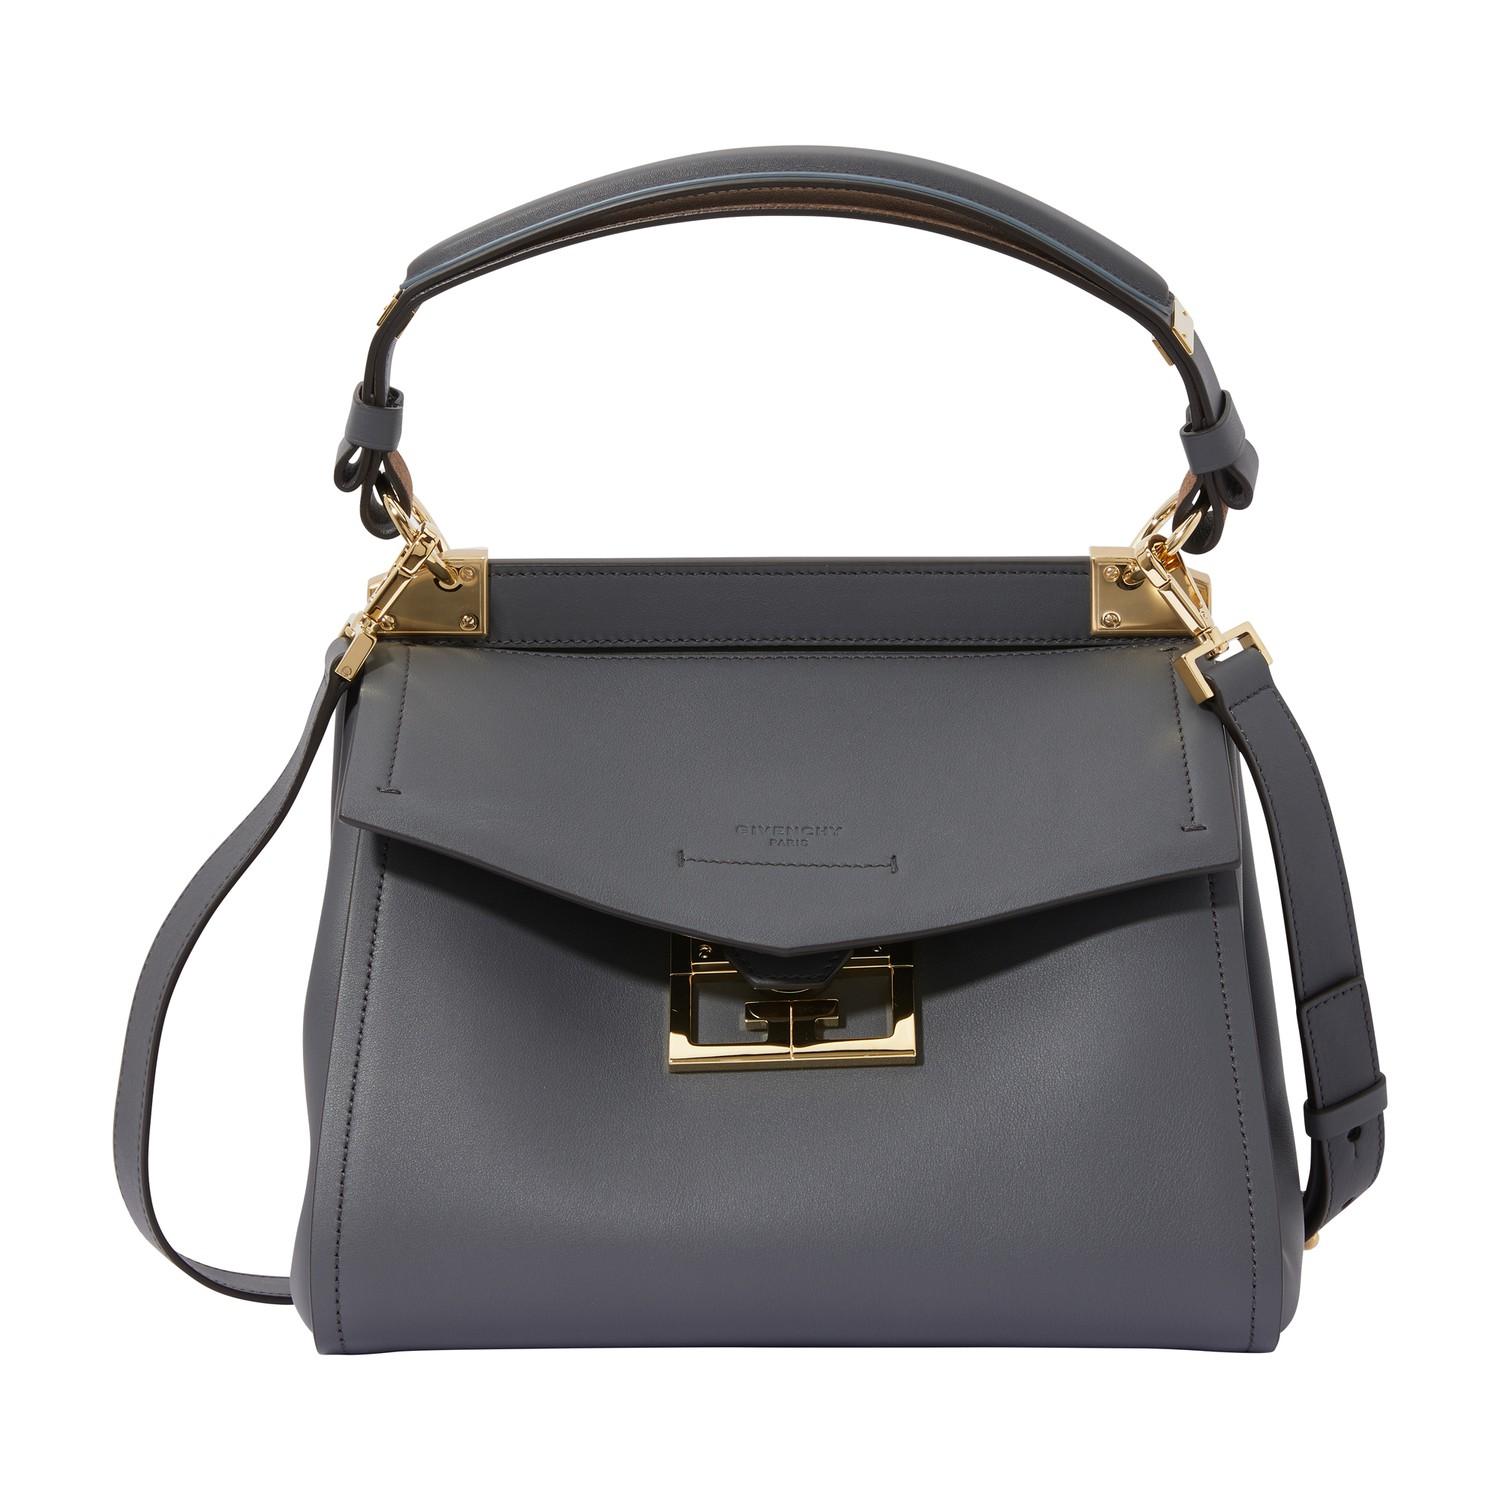 Givenchy Leather Mystic Small Handbag - Lyst